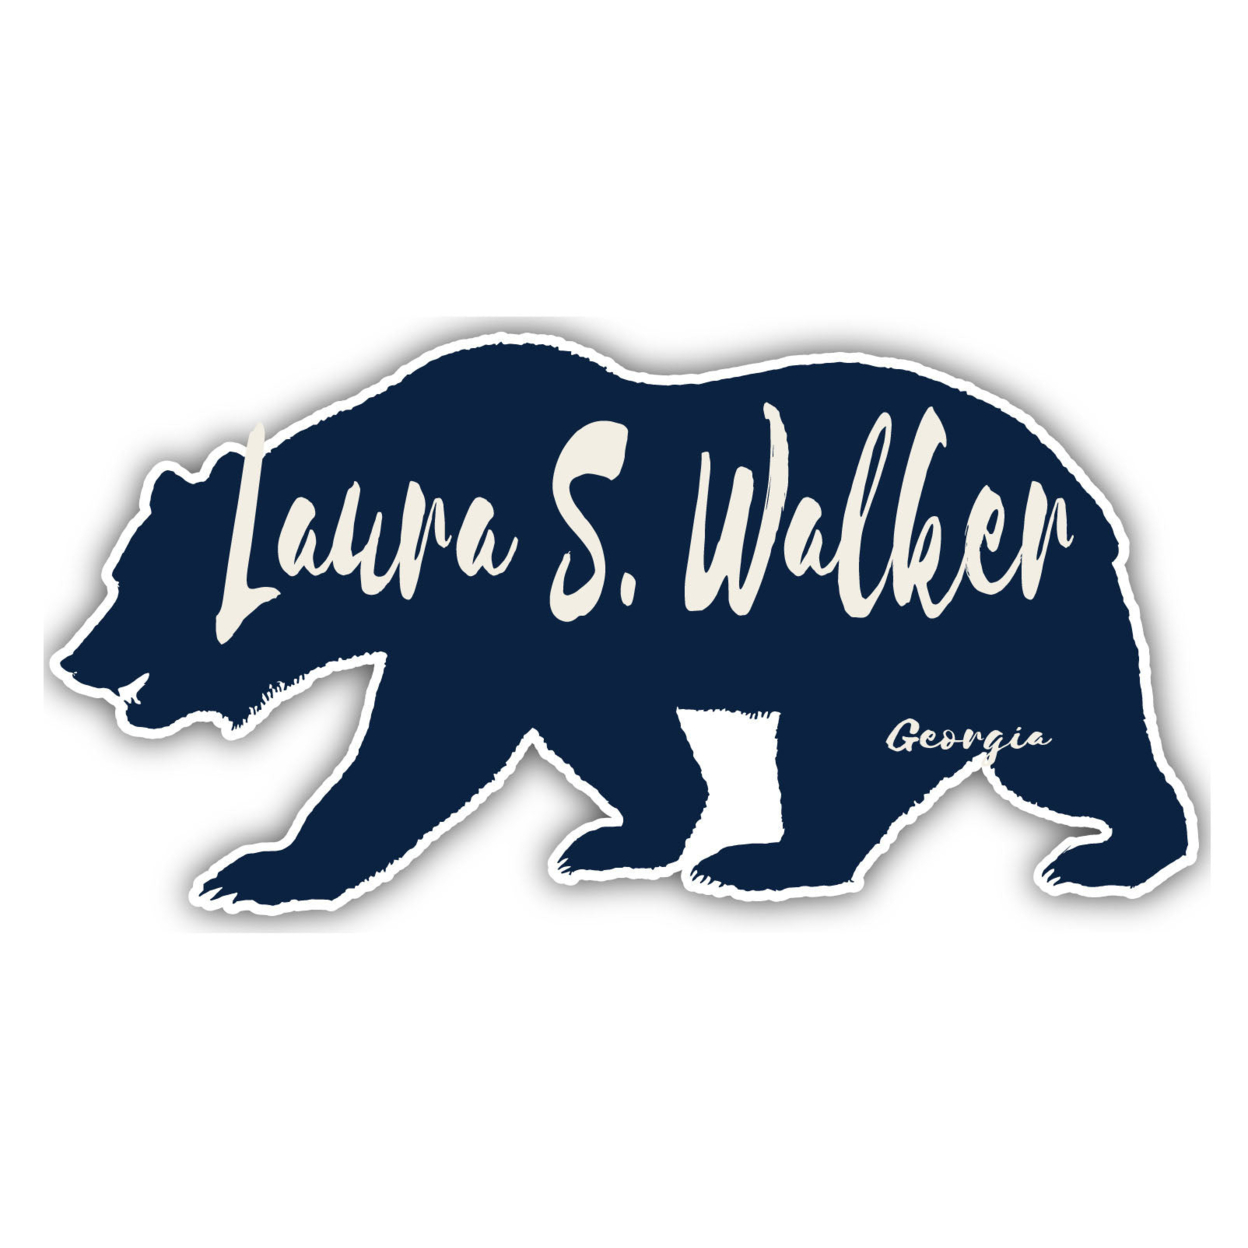 Laura S. Walker Georgia Souvenir Decorative Stickers (Choose Theme And Size) - 2-Inch, Bear